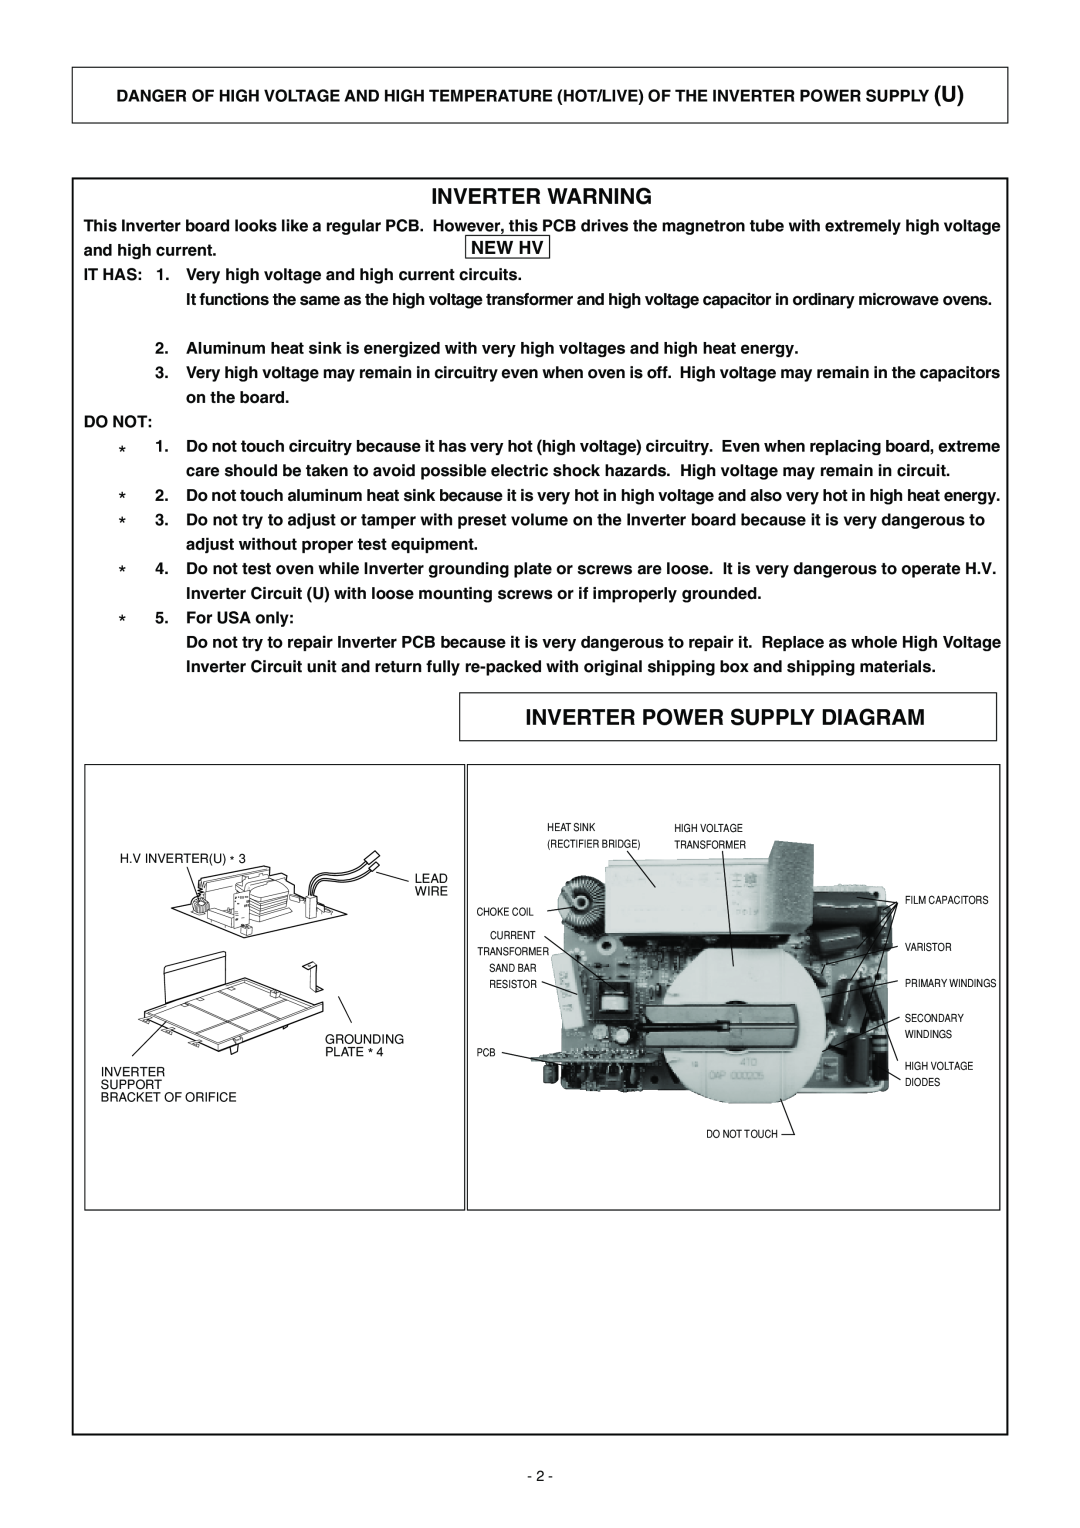 Panasonic NN-S560BF Inverter Warning, Inverter Power Supply Diagram, New Hv, and high current, Do Not, For USA only 